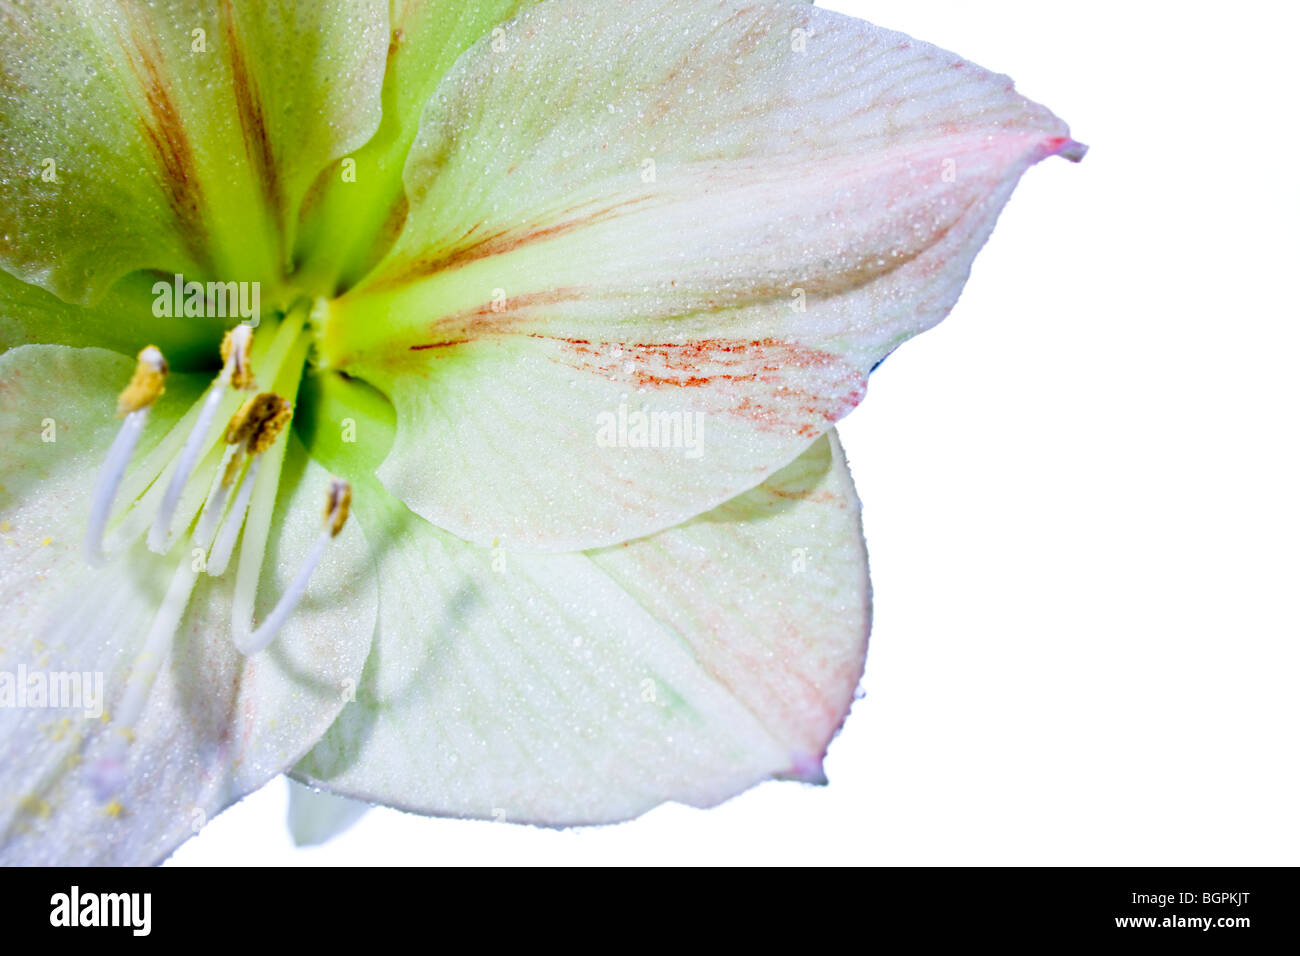 'Limona' Hippeastrum, Amaryllis (Hippeastrum x hortorum) Stock Photo